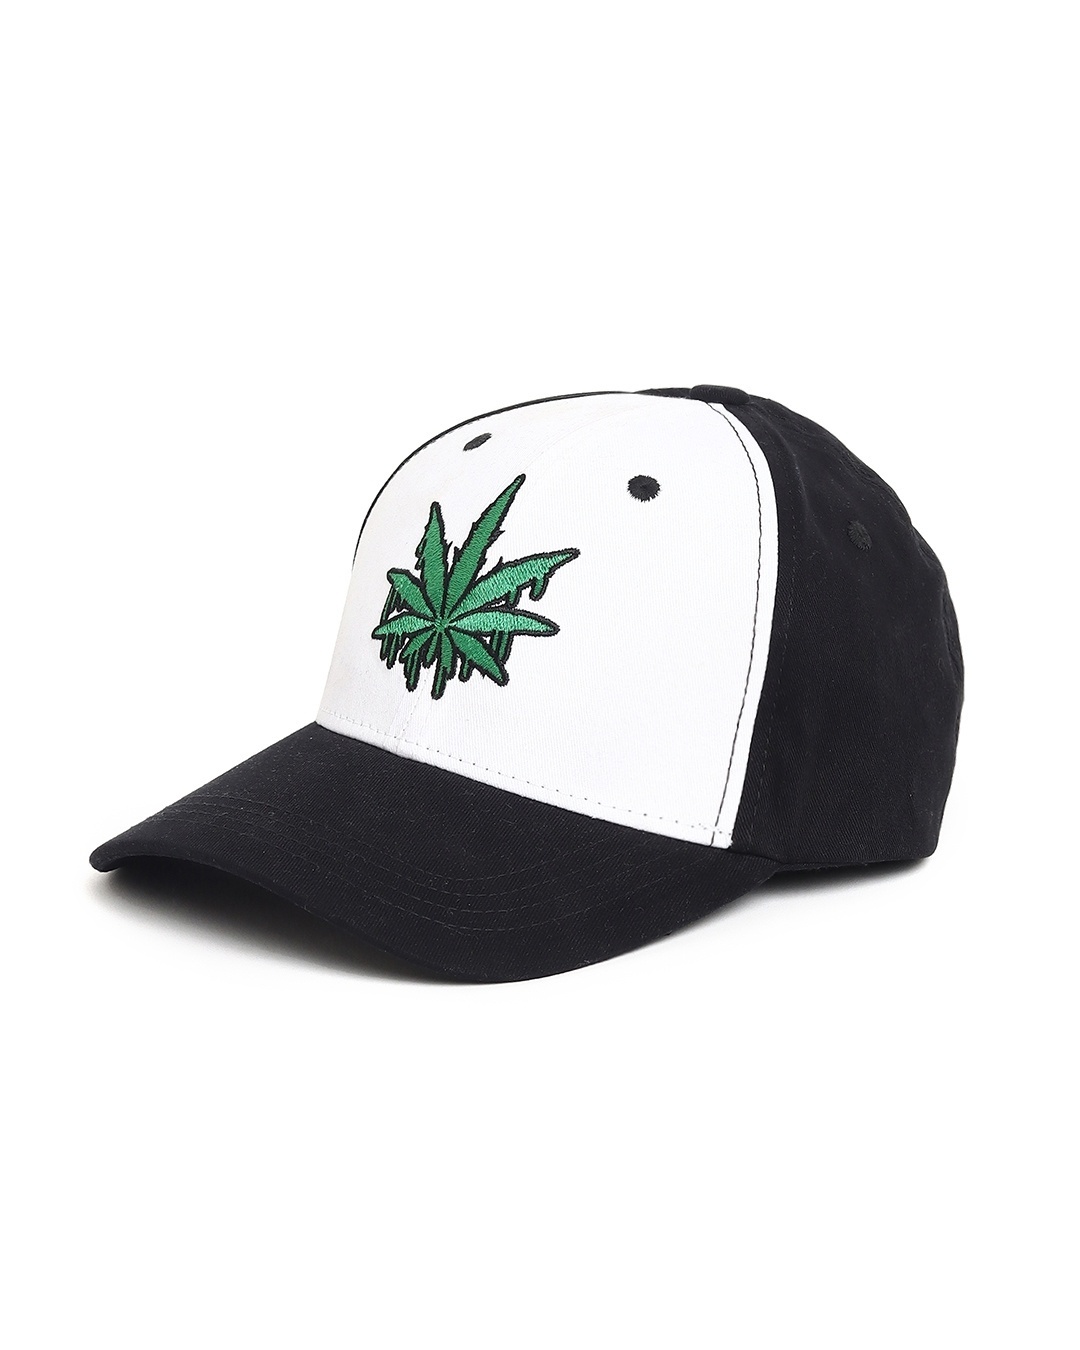 Shop Melting Leaf Baseball Cap-Full